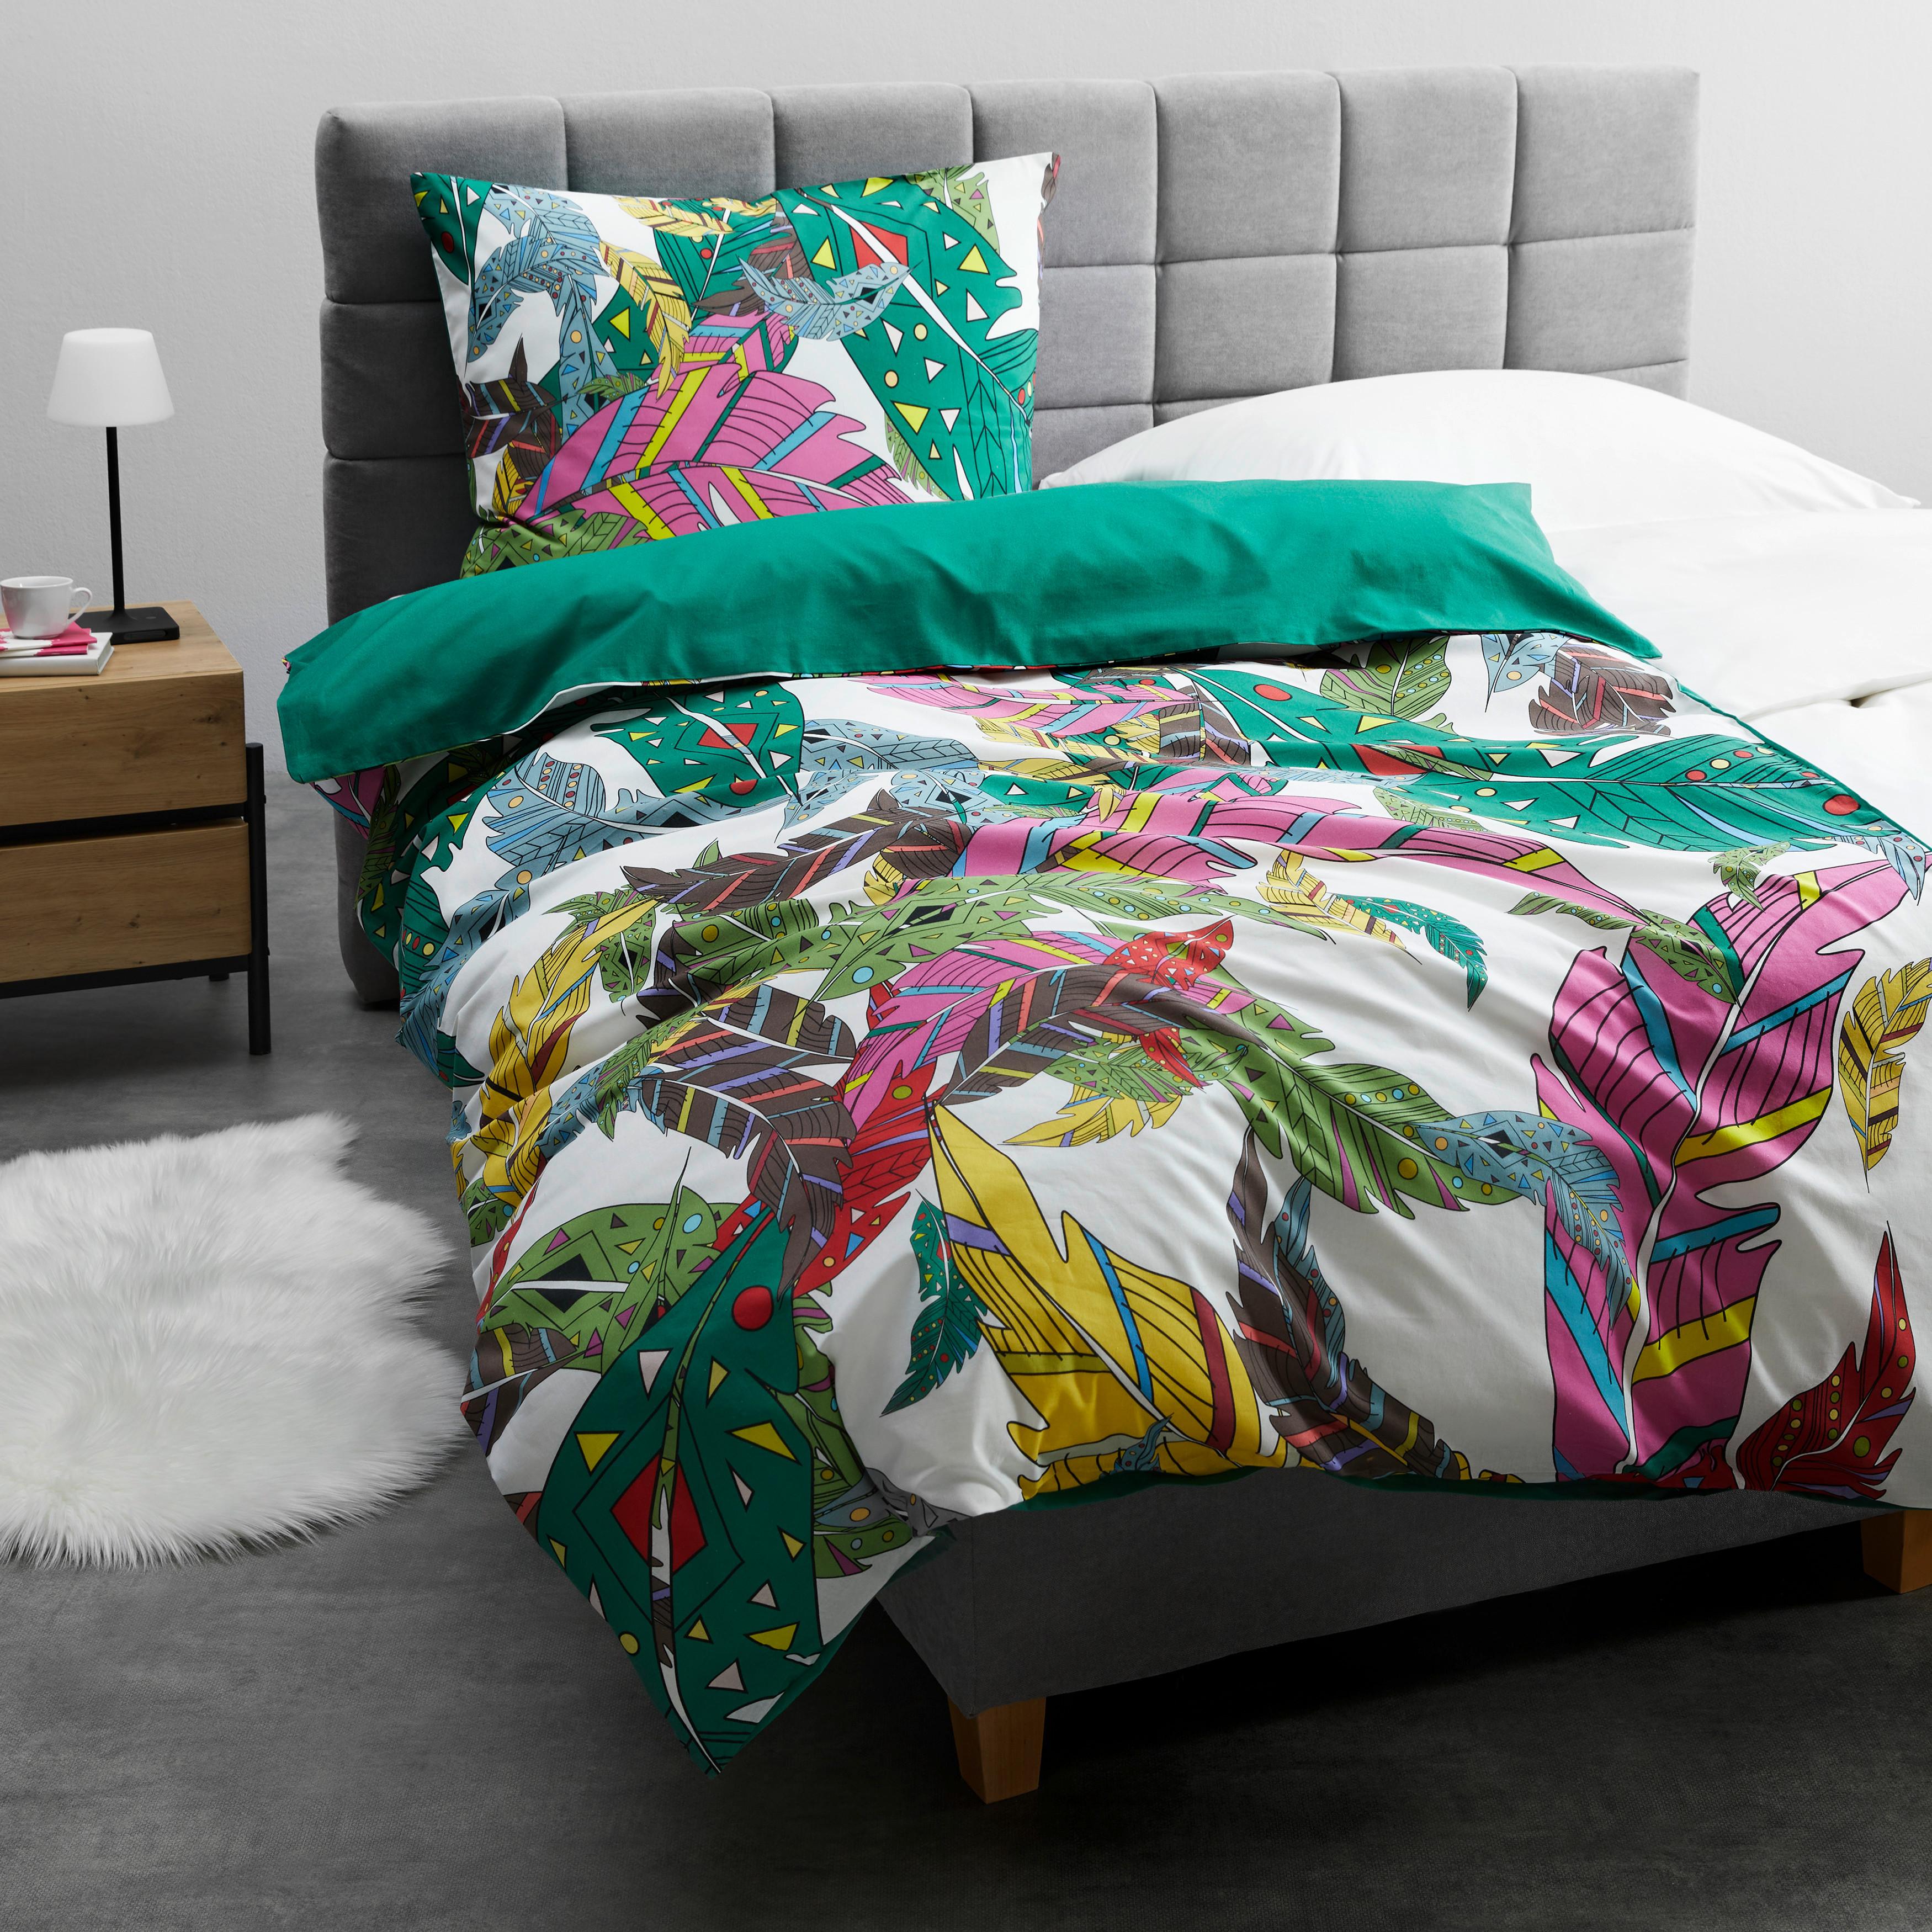 Wendebettwäsche Joline in Multicolor ca. 140x200cm - Multicolor, KONVENTIONELL, Textil (140/200cm) - Bessagi Home